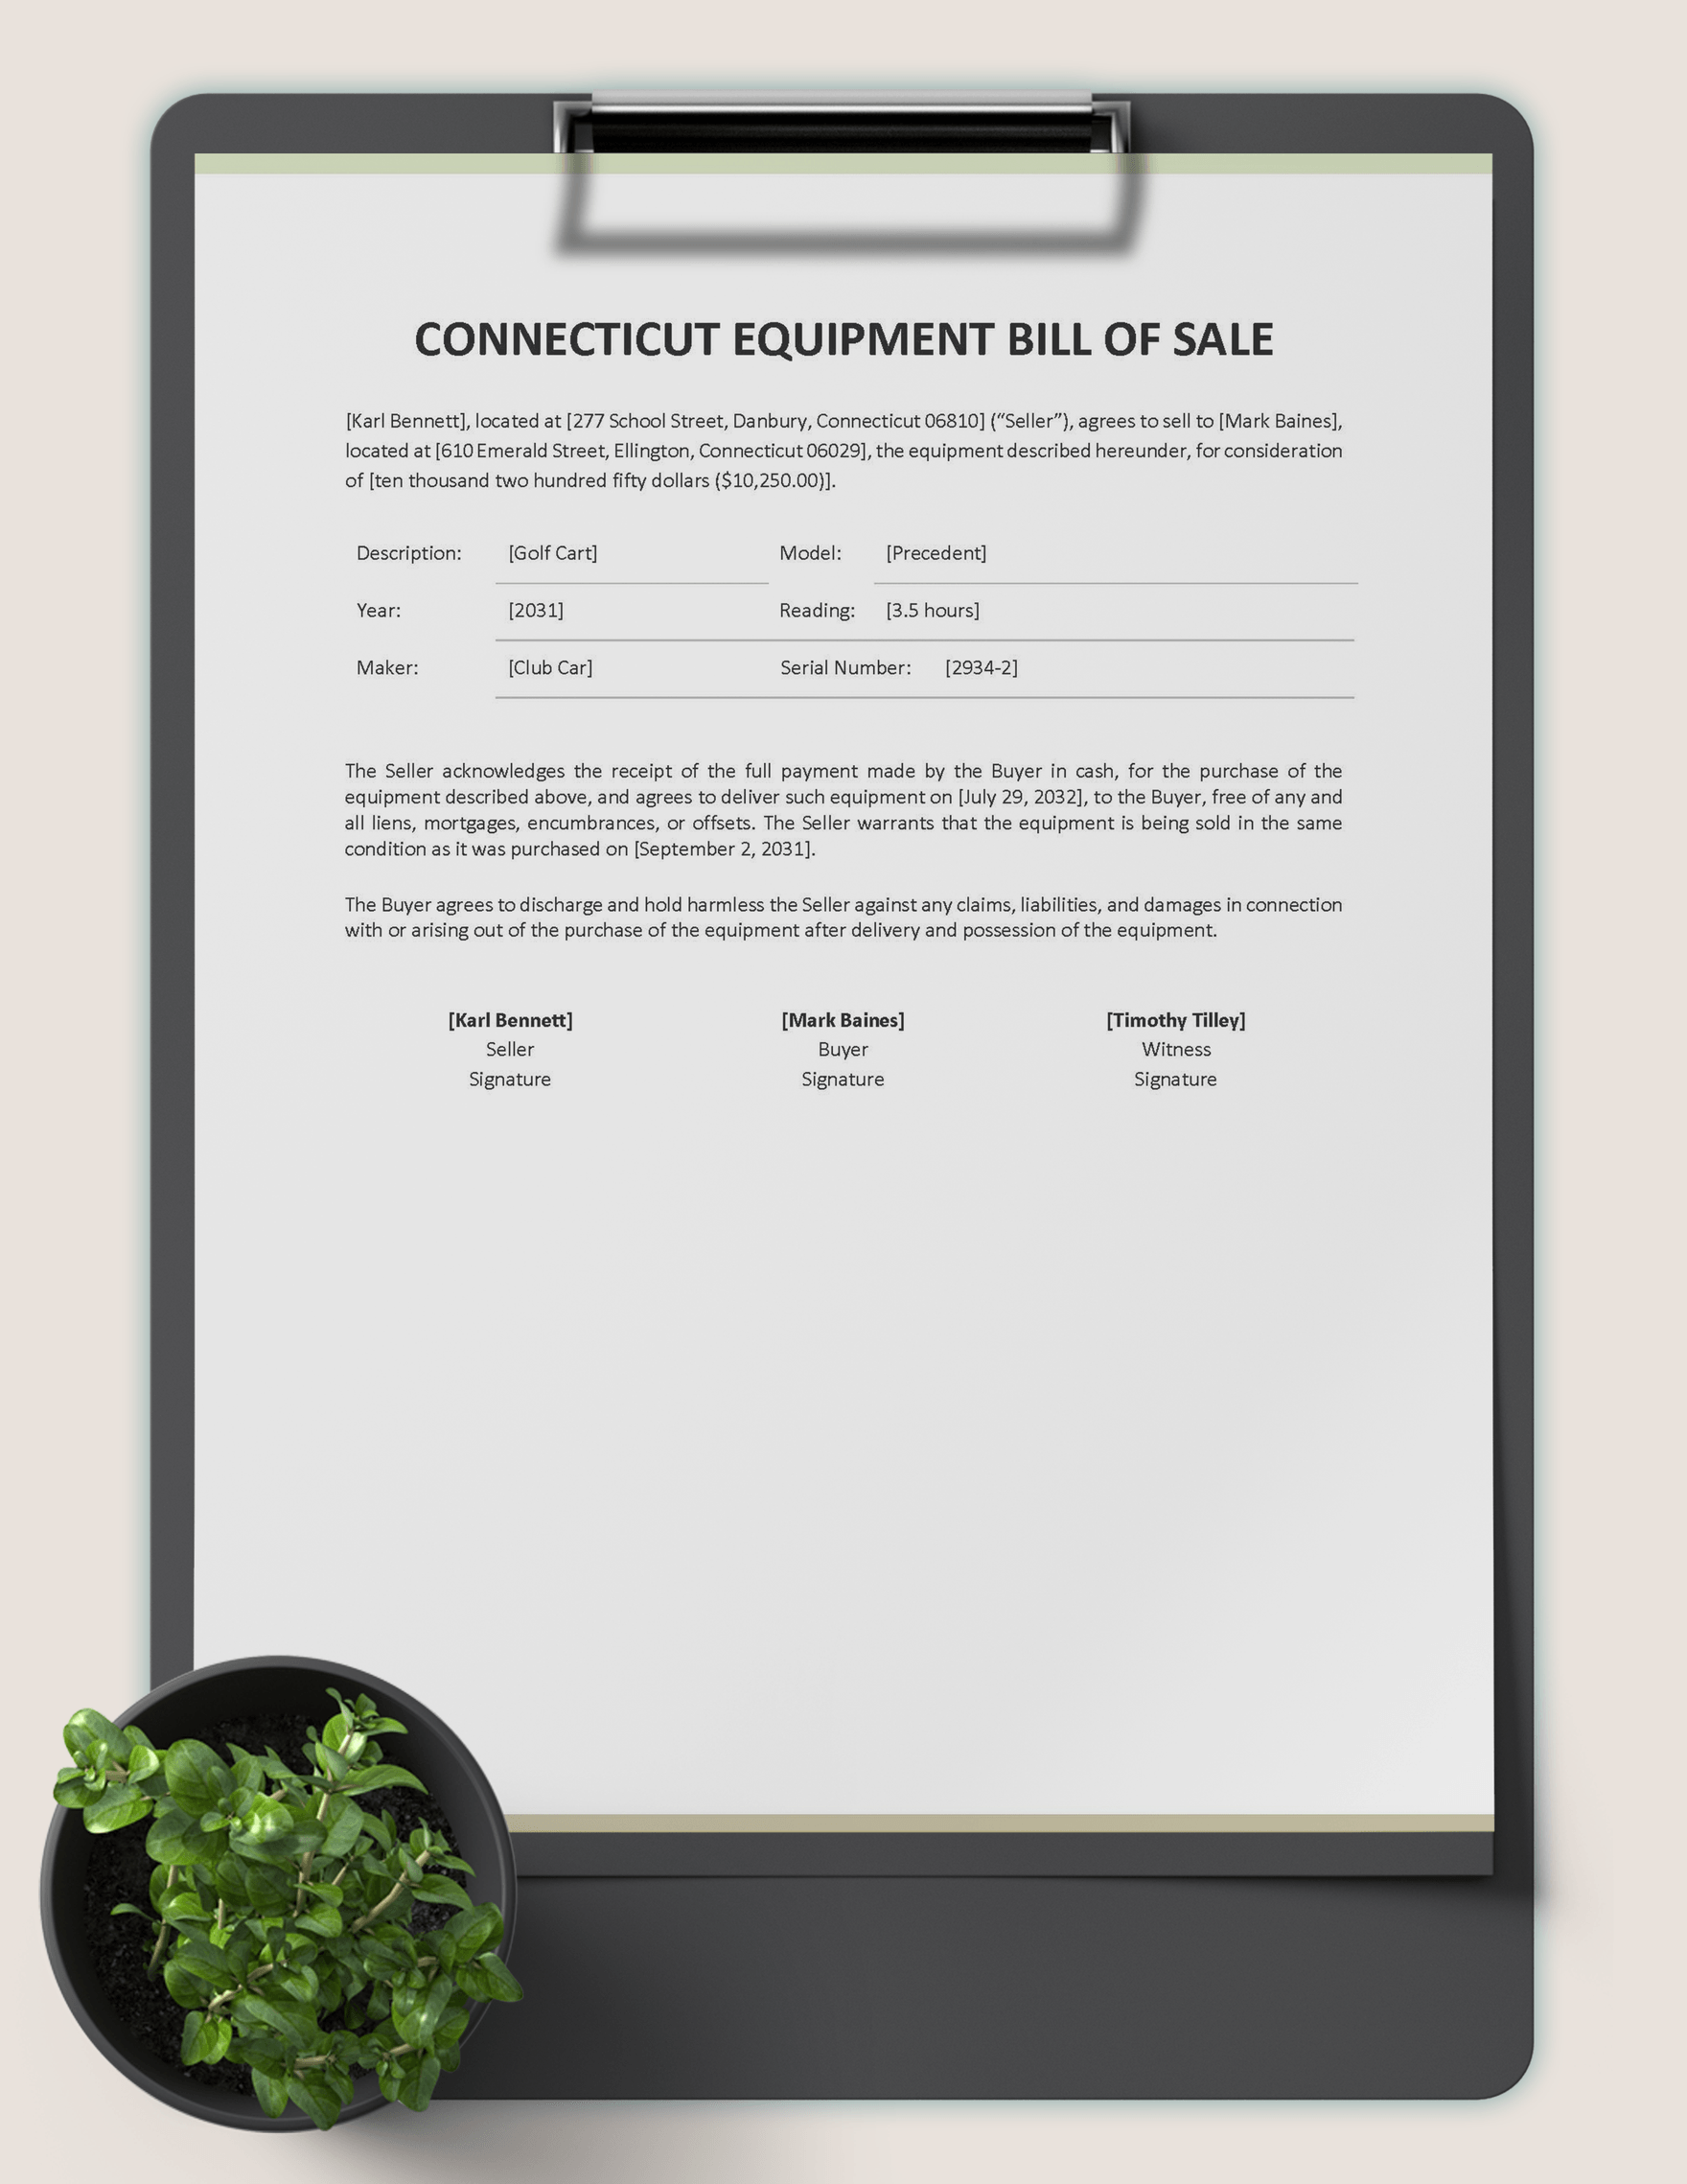 Connecticut Equipment Bill of Sale Template